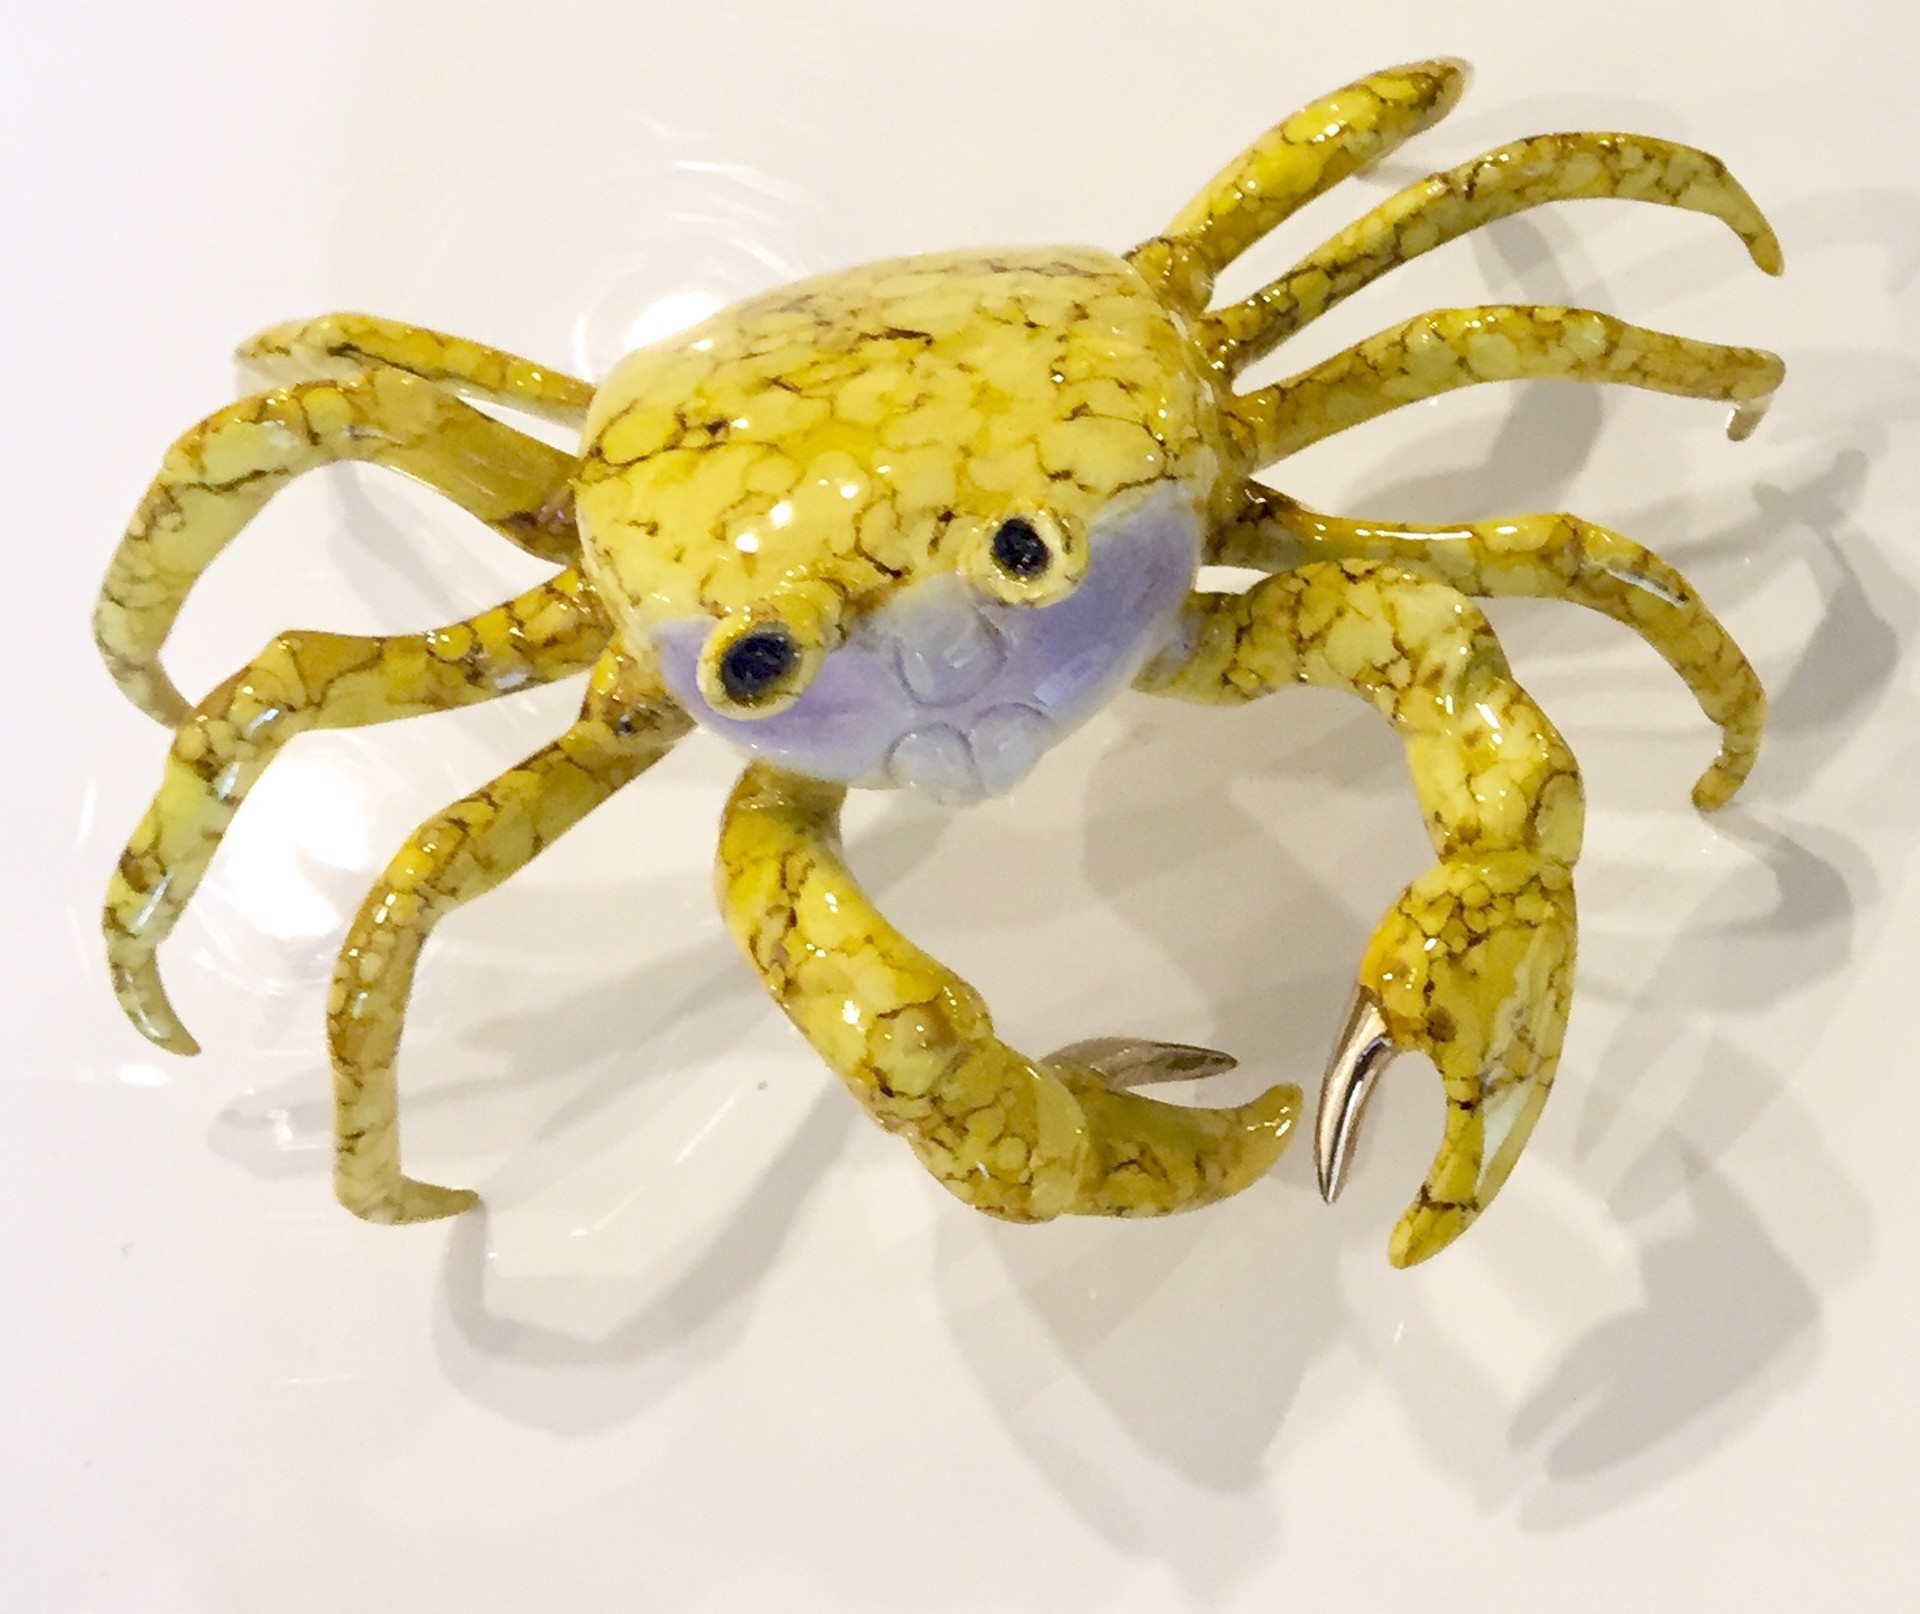 Atlantic Ghost Crab by Brian Arthur